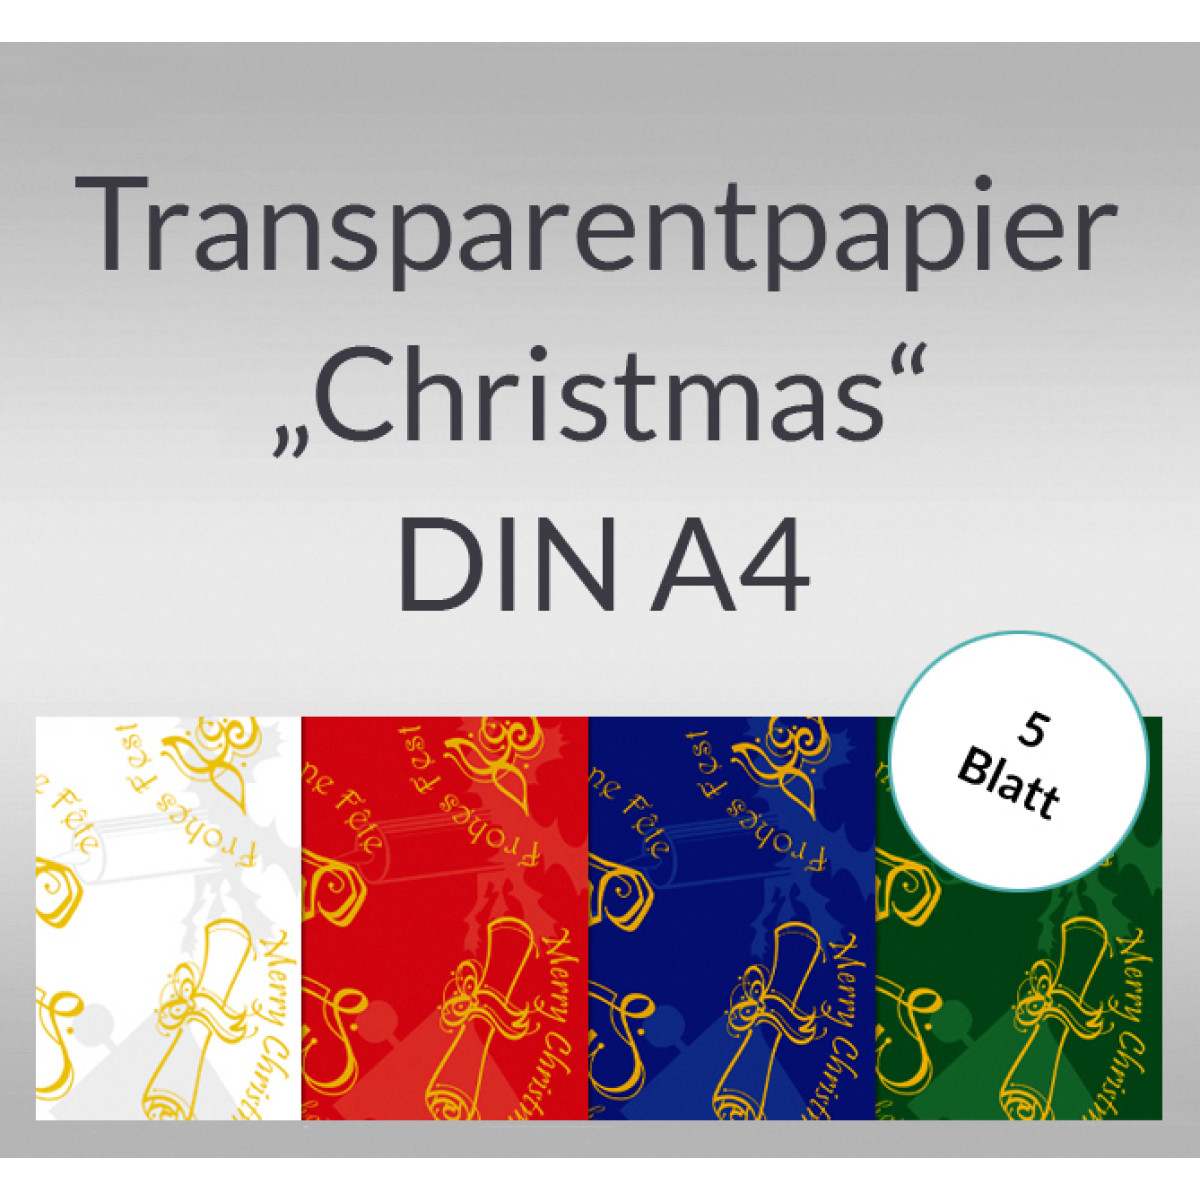 Transparentpapier "Christmas" DIN A4 - 5 Blatt